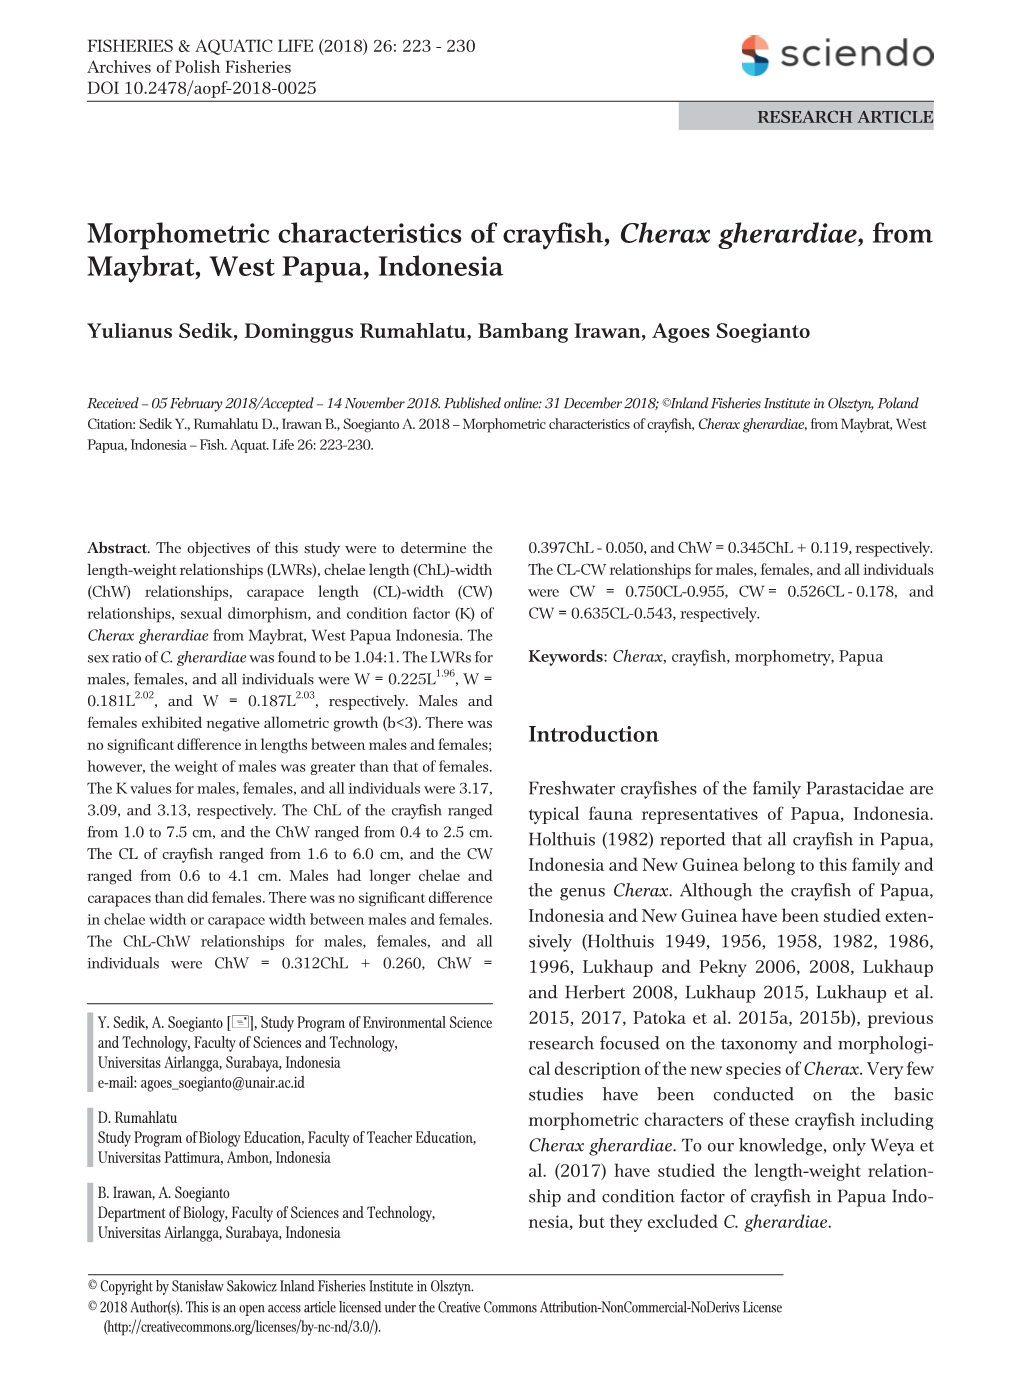 Morphometric Characteristics of Crayfish, Cherax Gherardiae, from Maybrat, West Papua, Indonesia